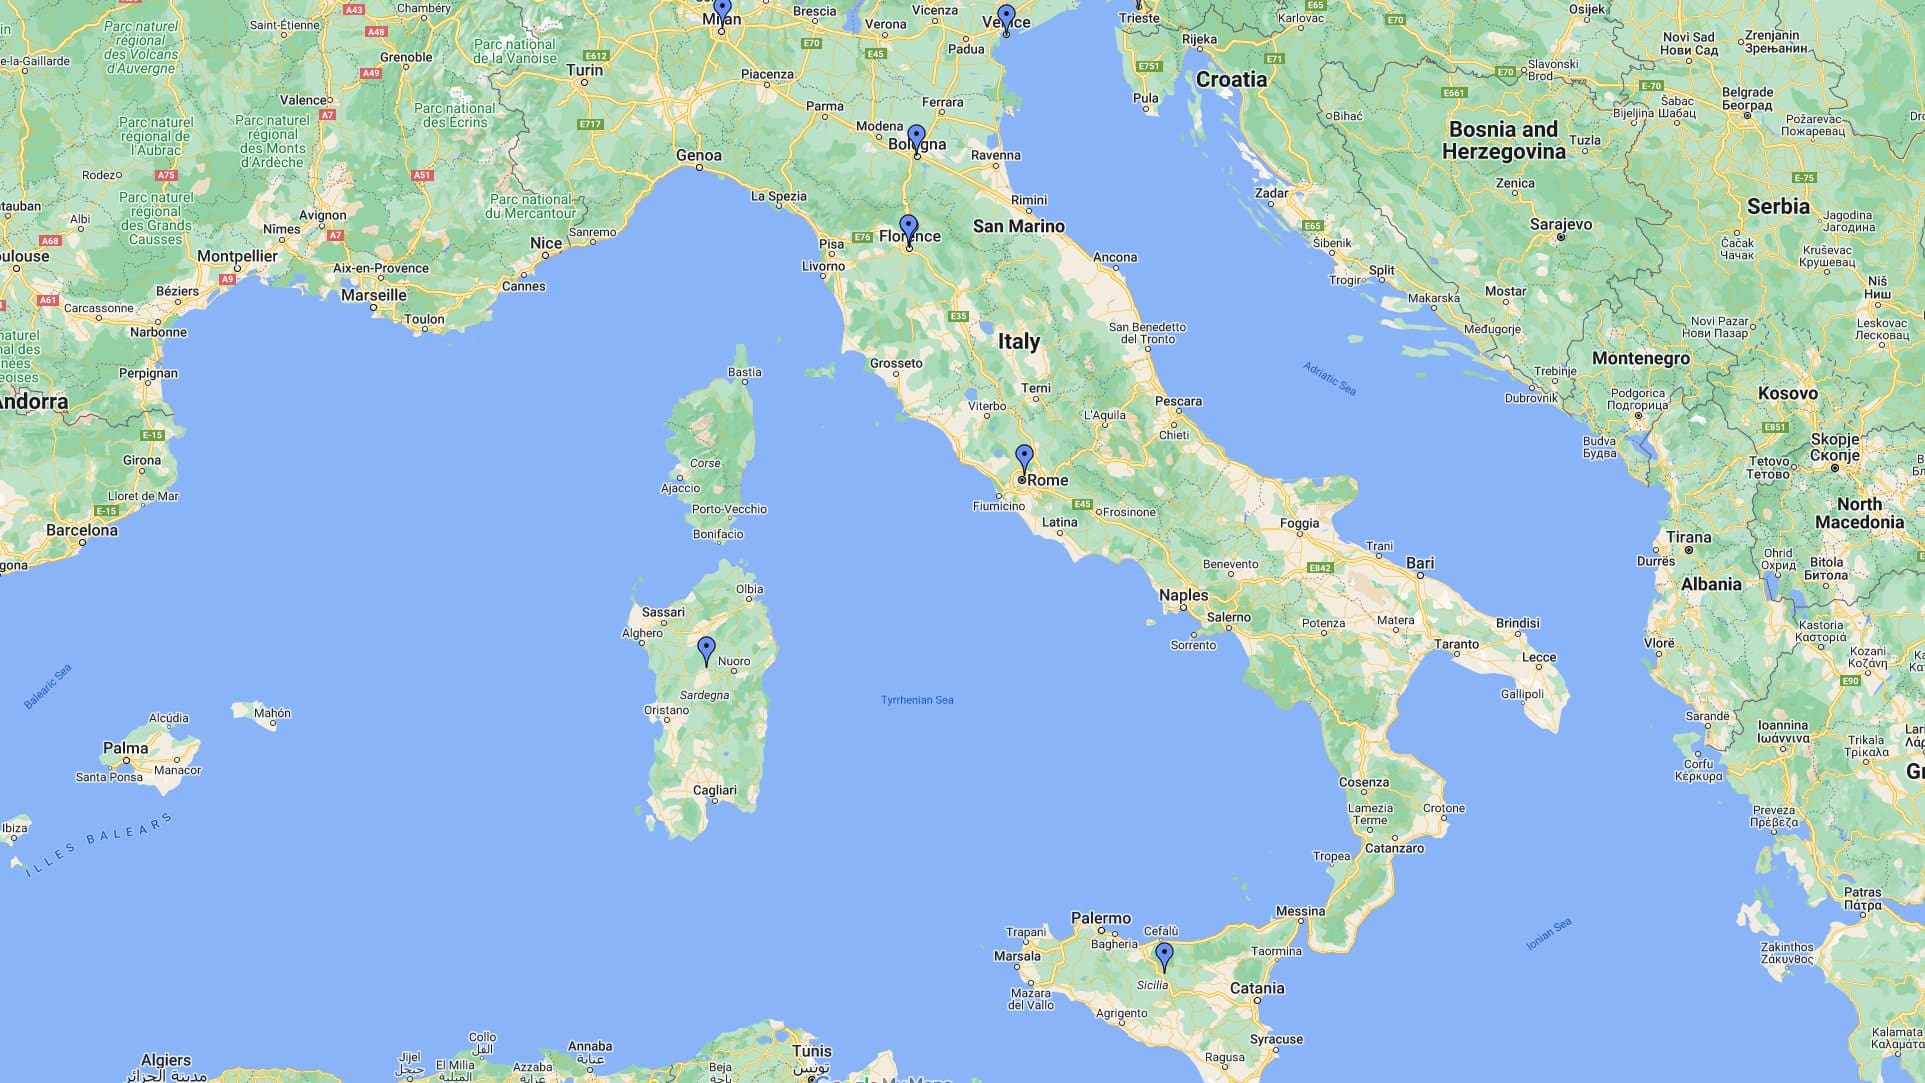 Italian Authorities Essentially Broke the Internet Recently